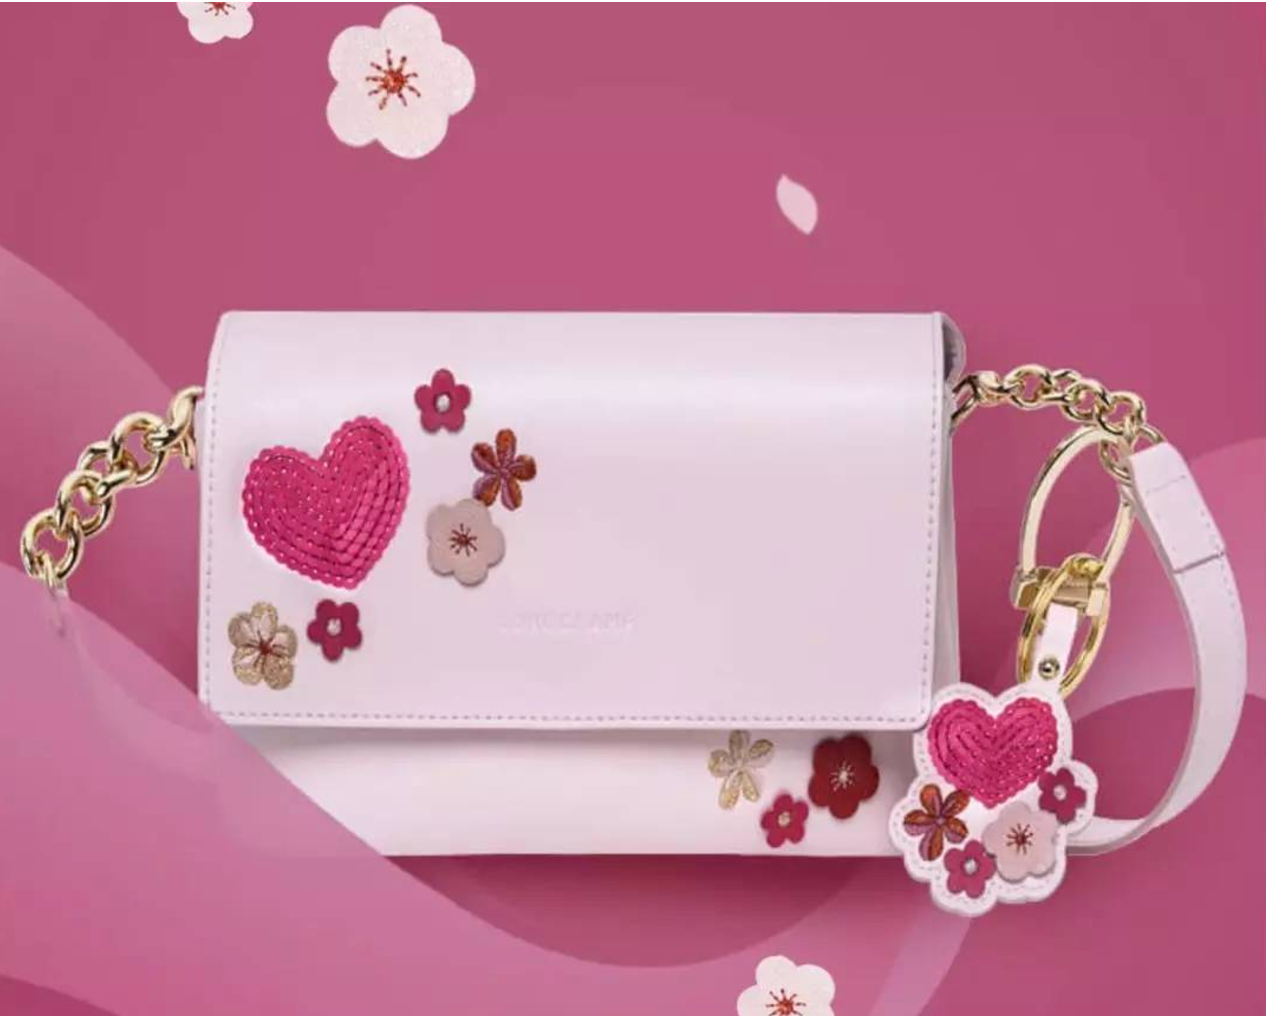 The exclusive Qixi bag. Photo: Longchamp/WeChat